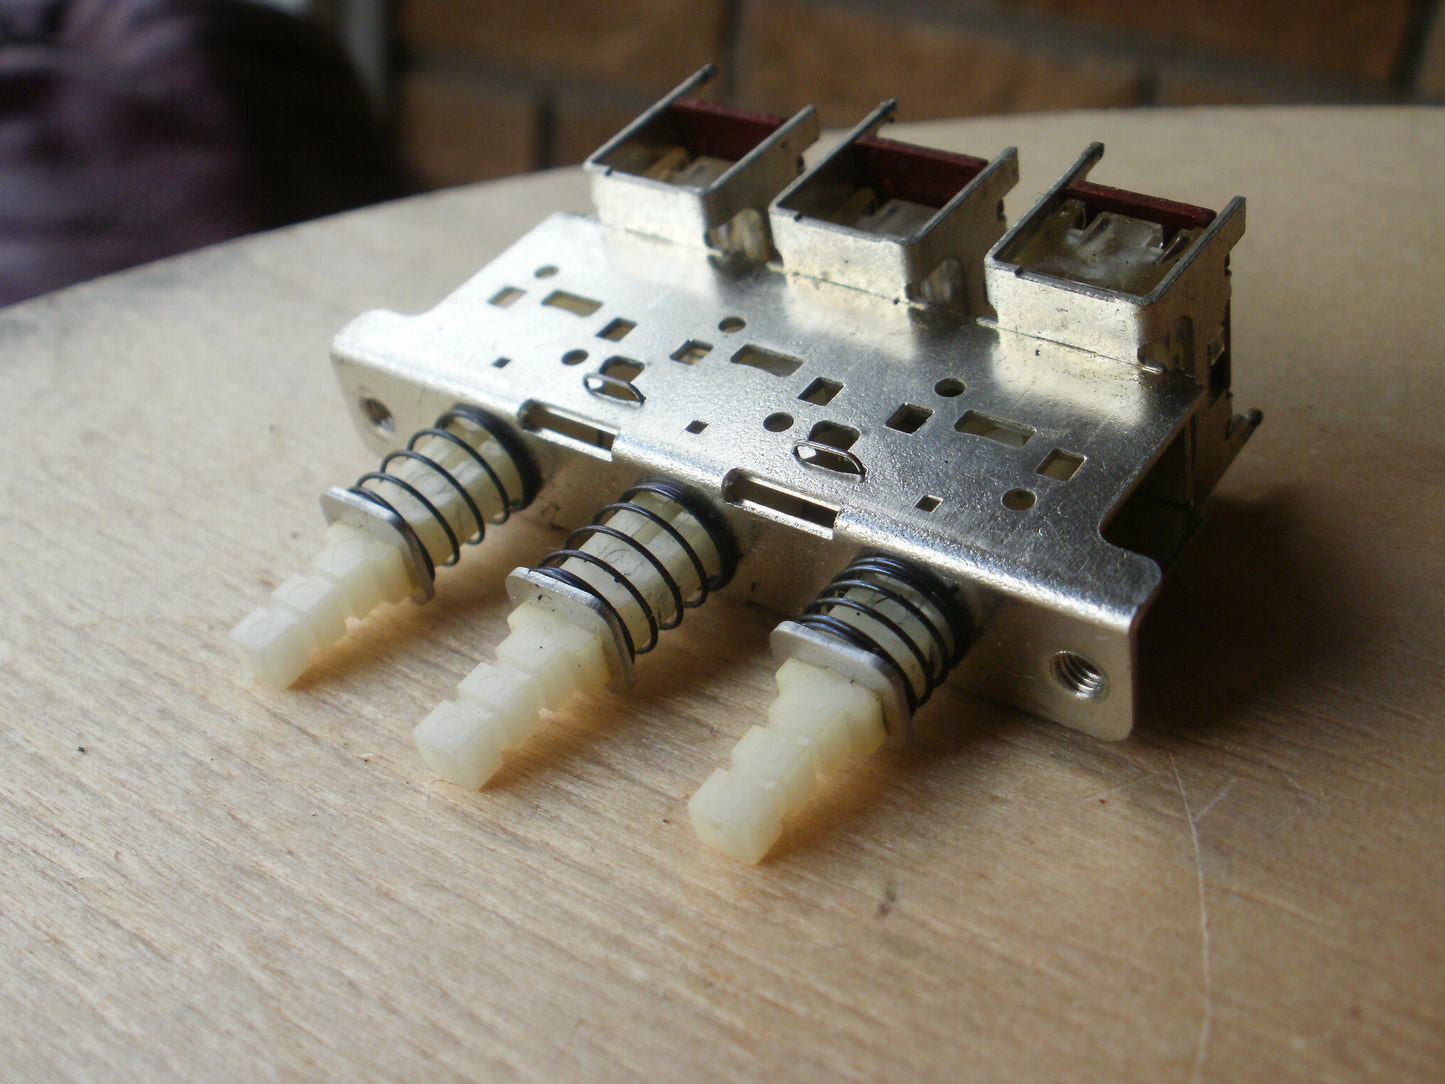 TASCAM Portastudio PCB switches model 144